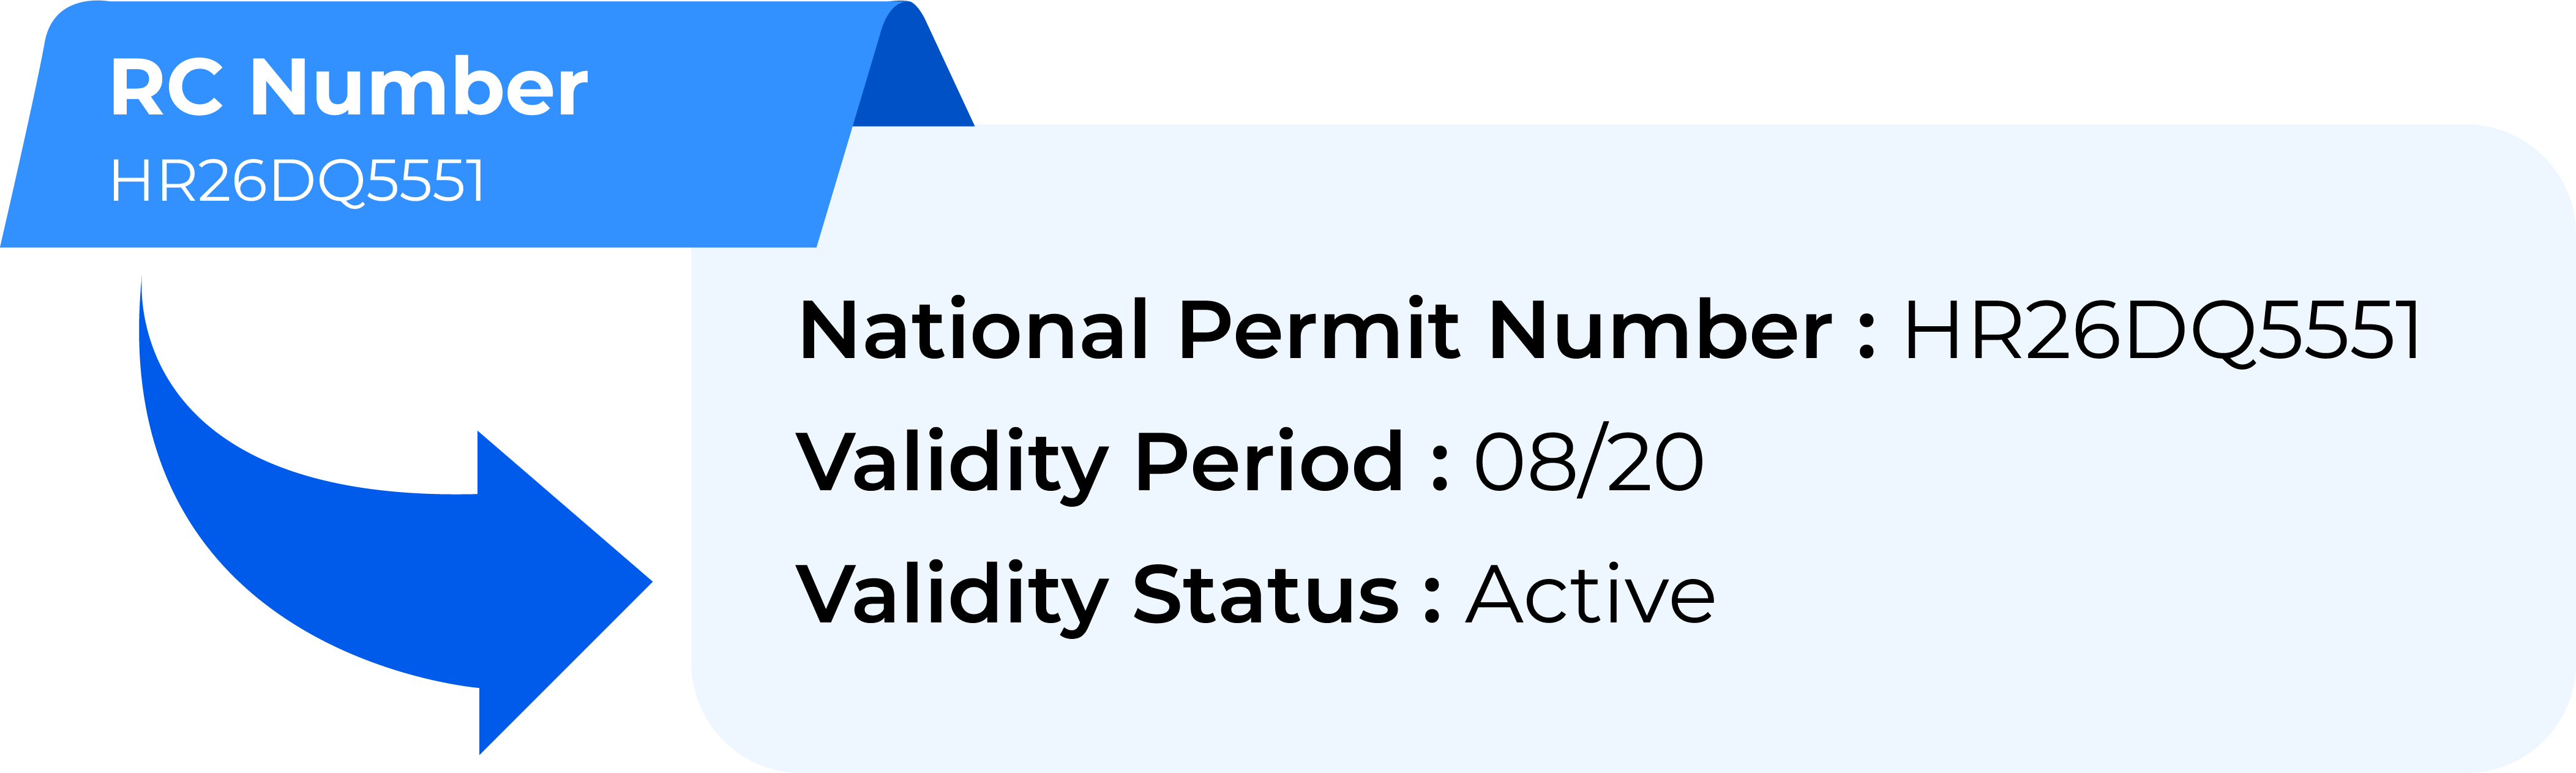 National permit verification api